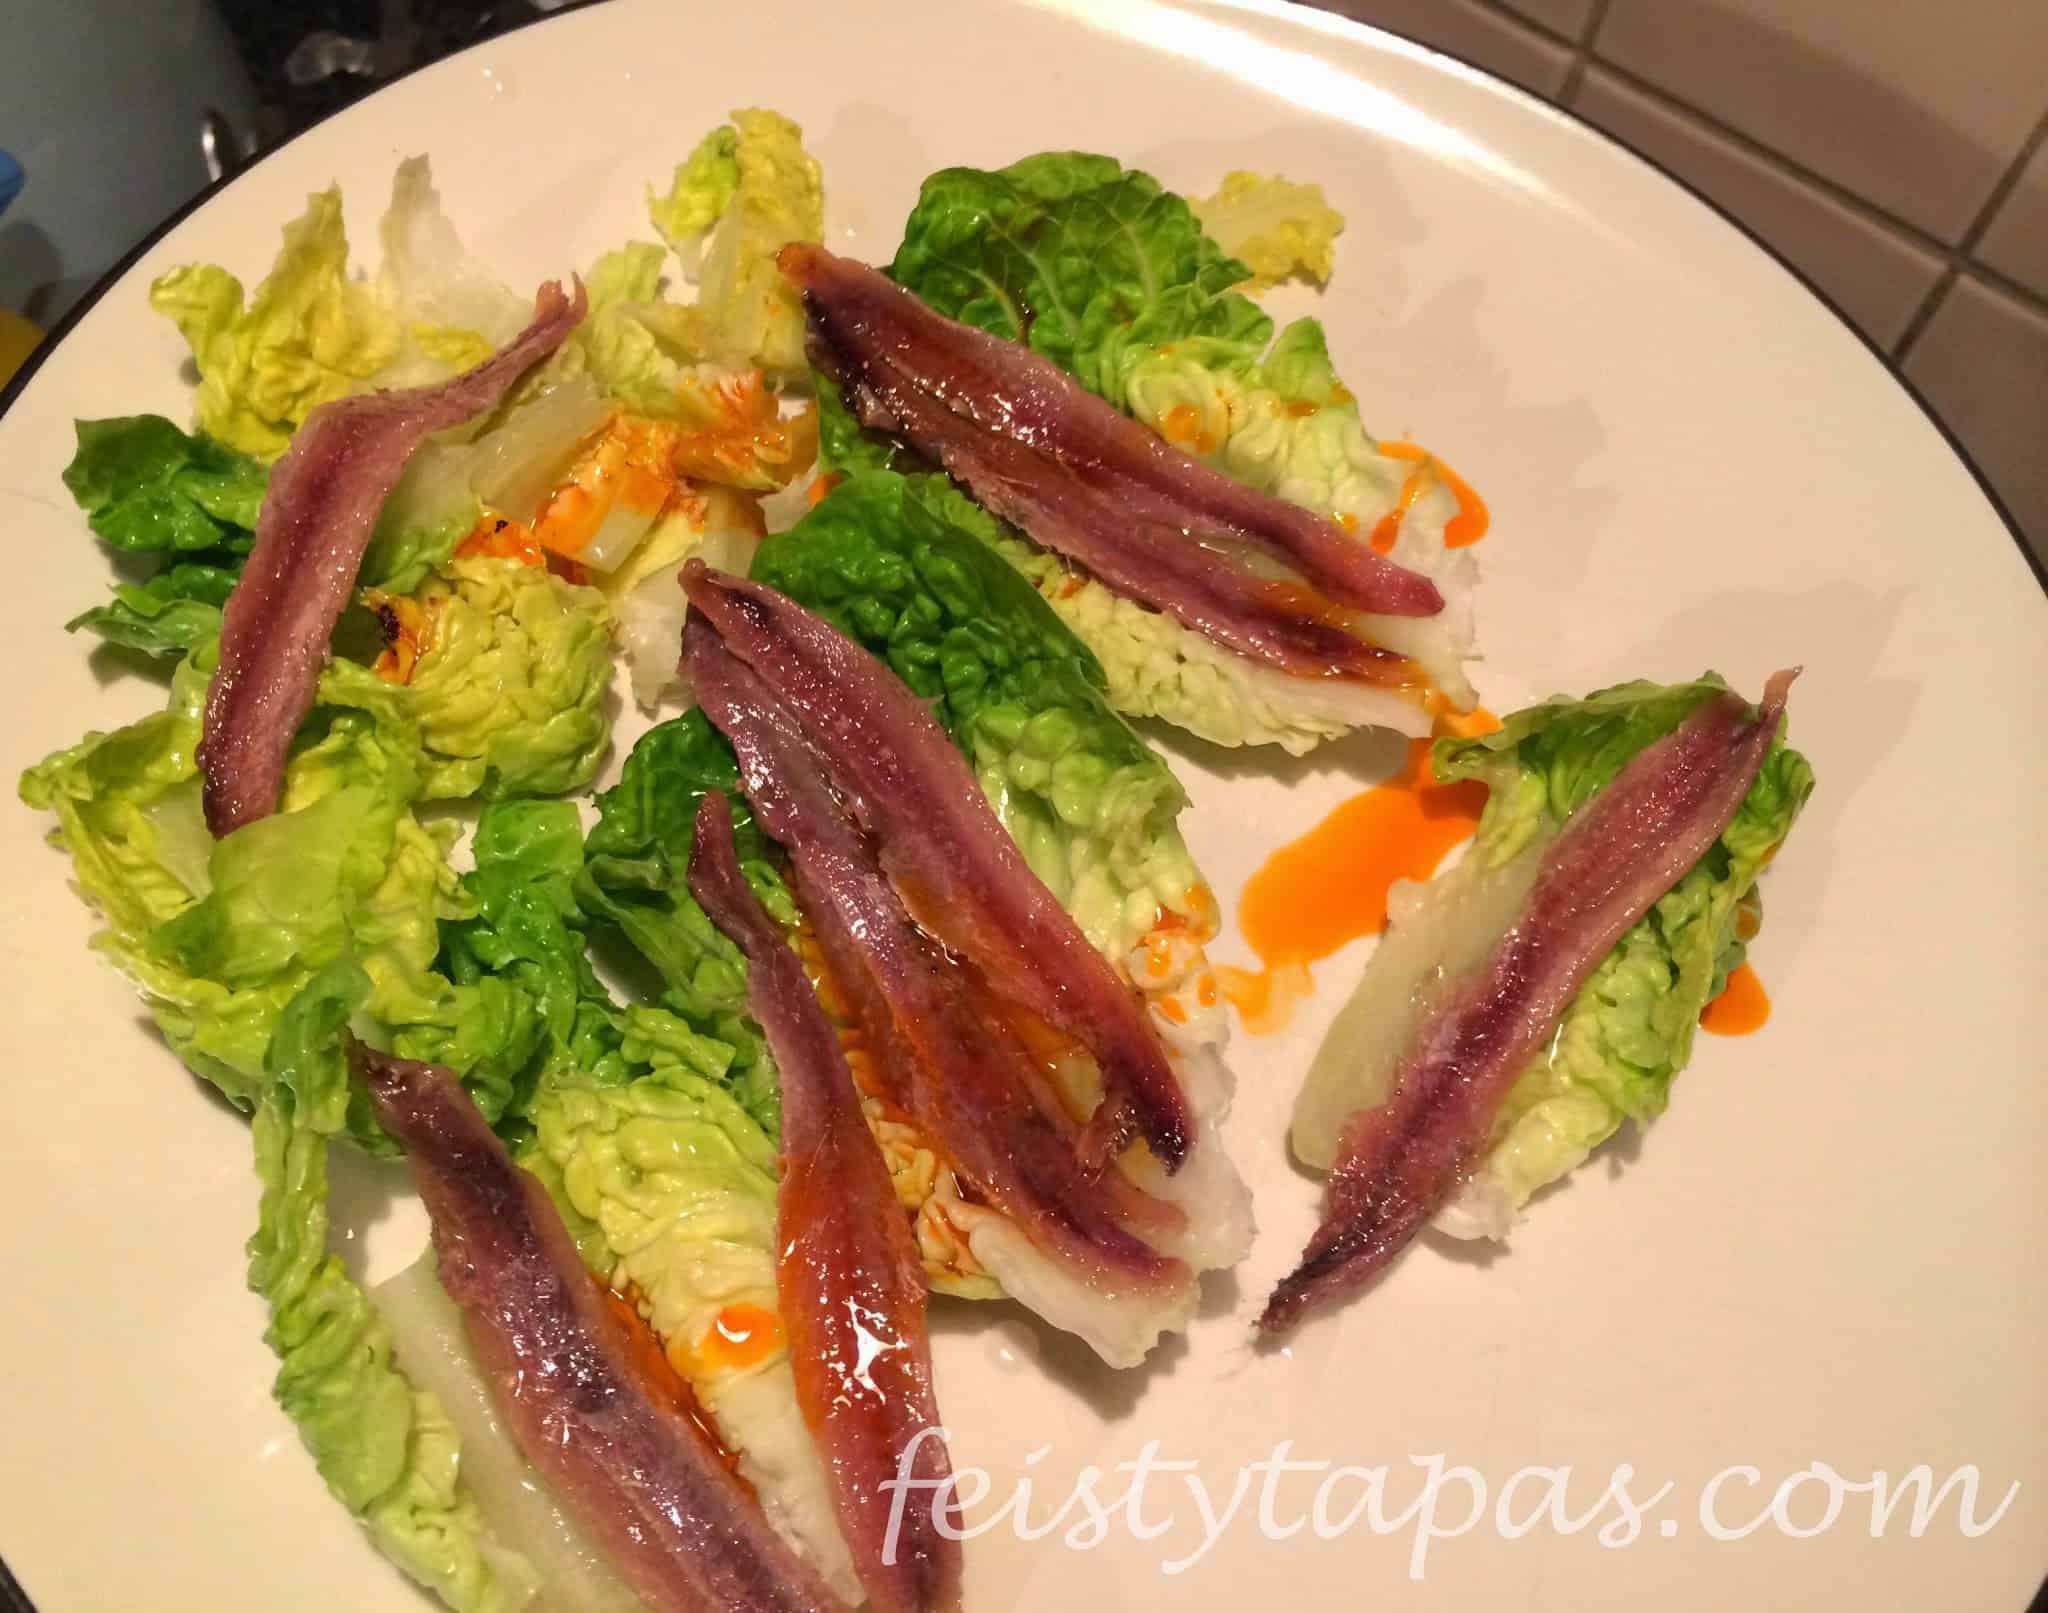 Feisty Tapas: Little gem lettuce with anchovies / Cogollos de lechuga con anchoas